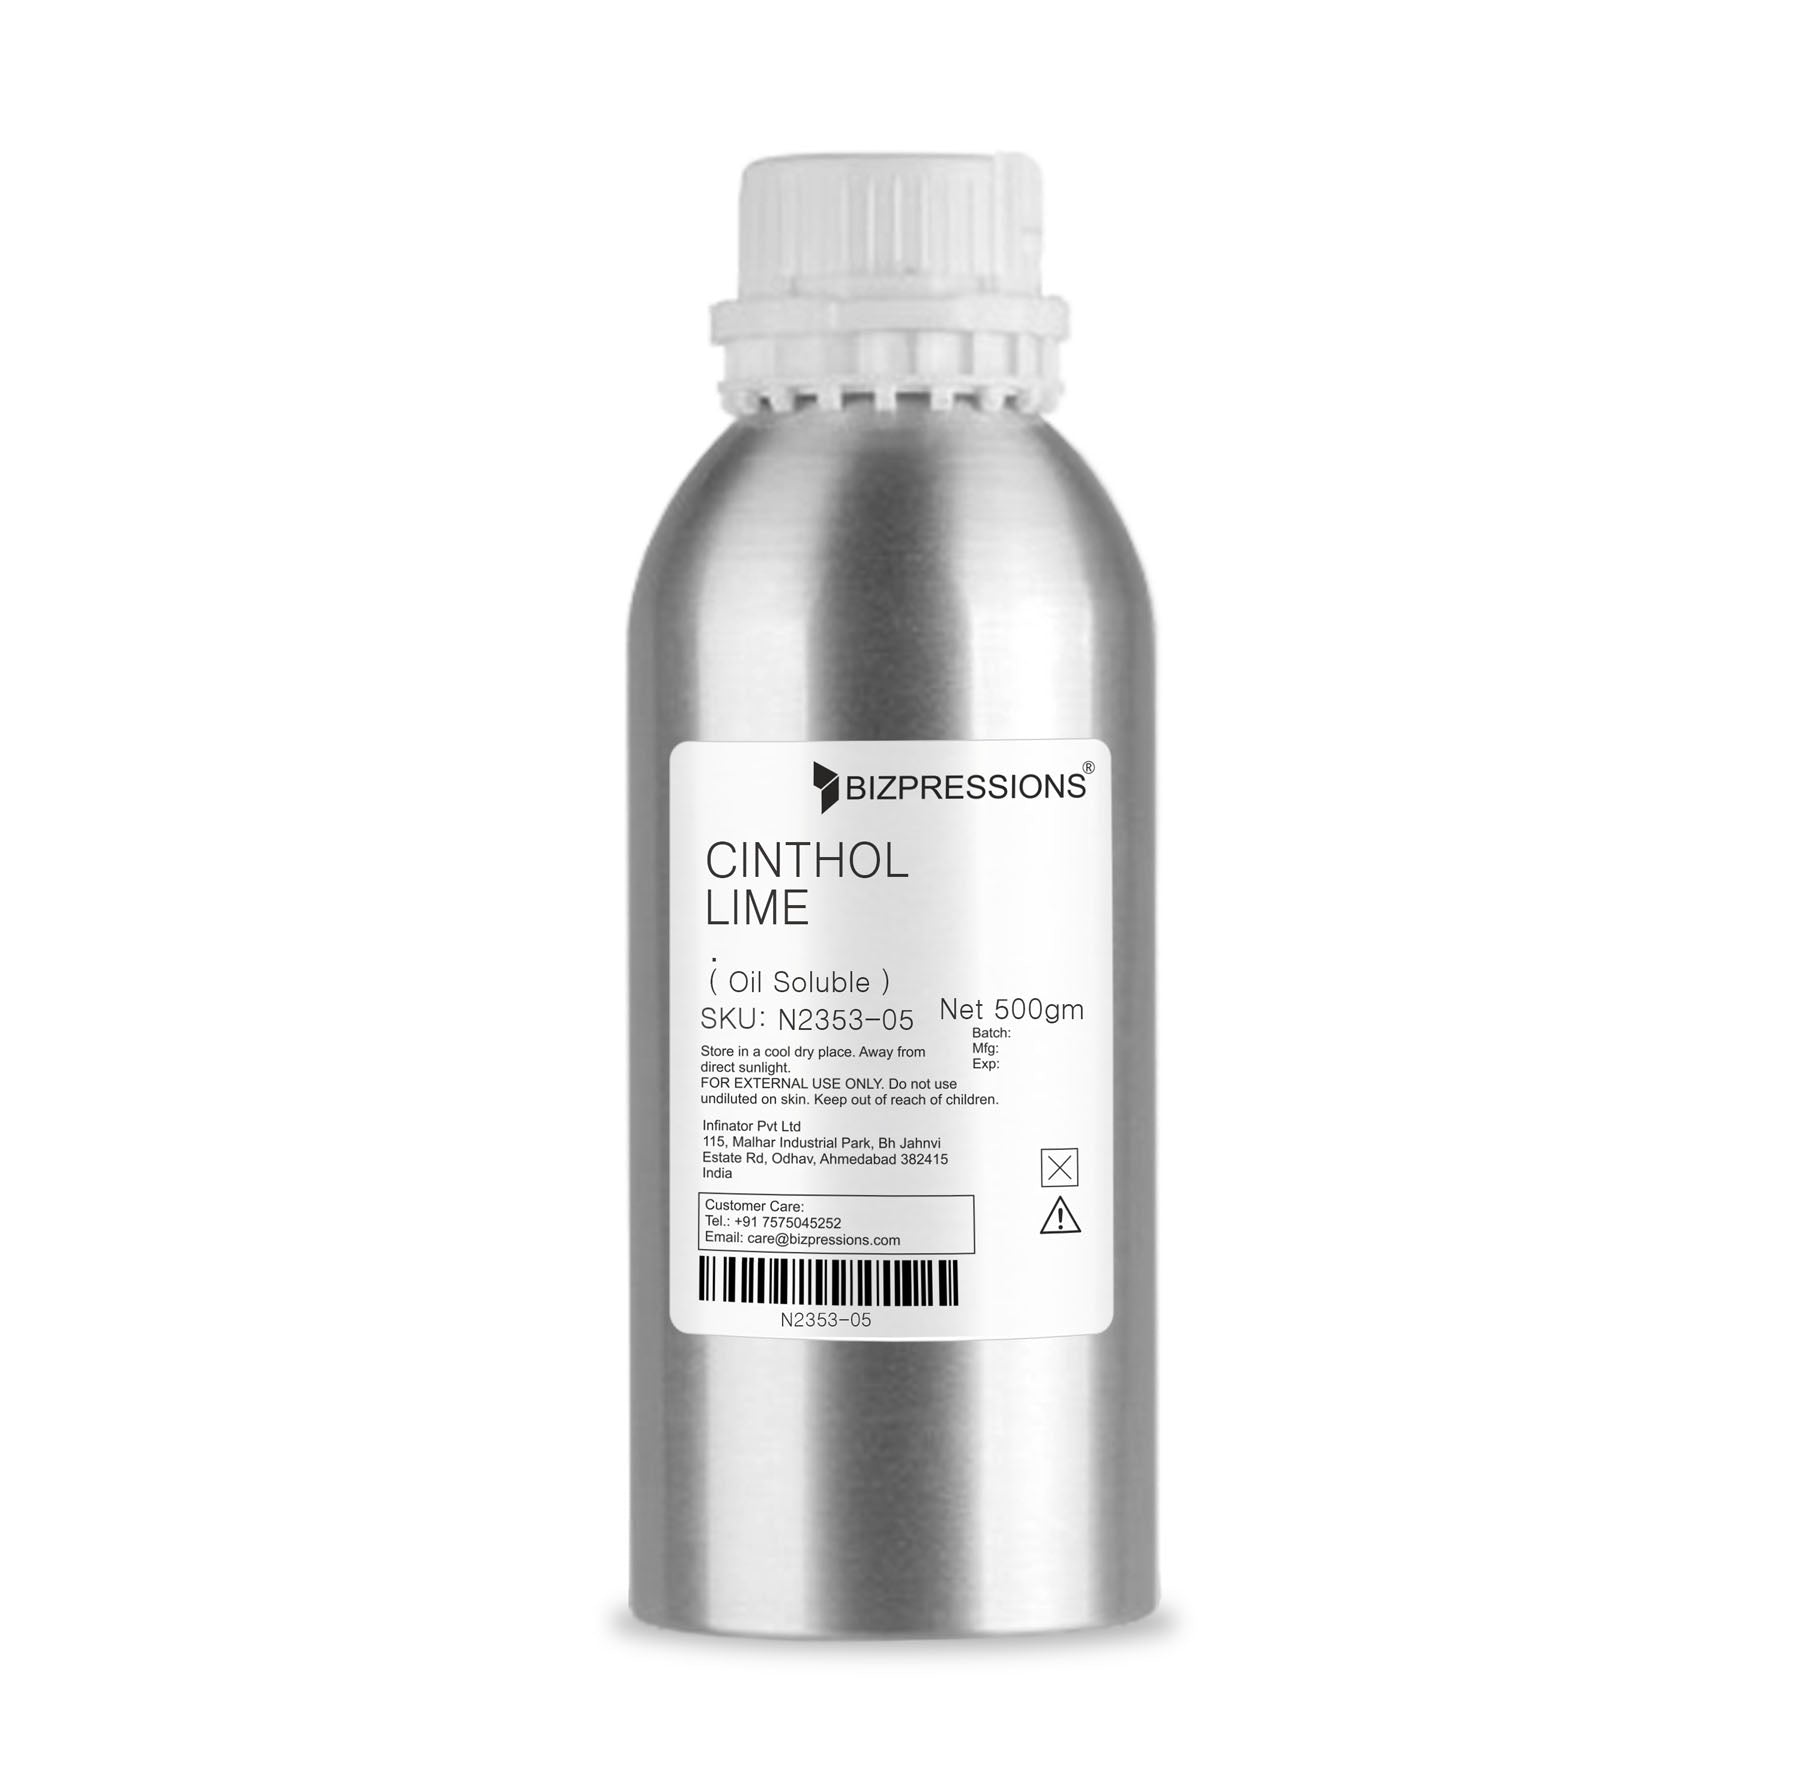 CINTHOL LIME - Fragrance ( Oil Soluble ) - 500 gm